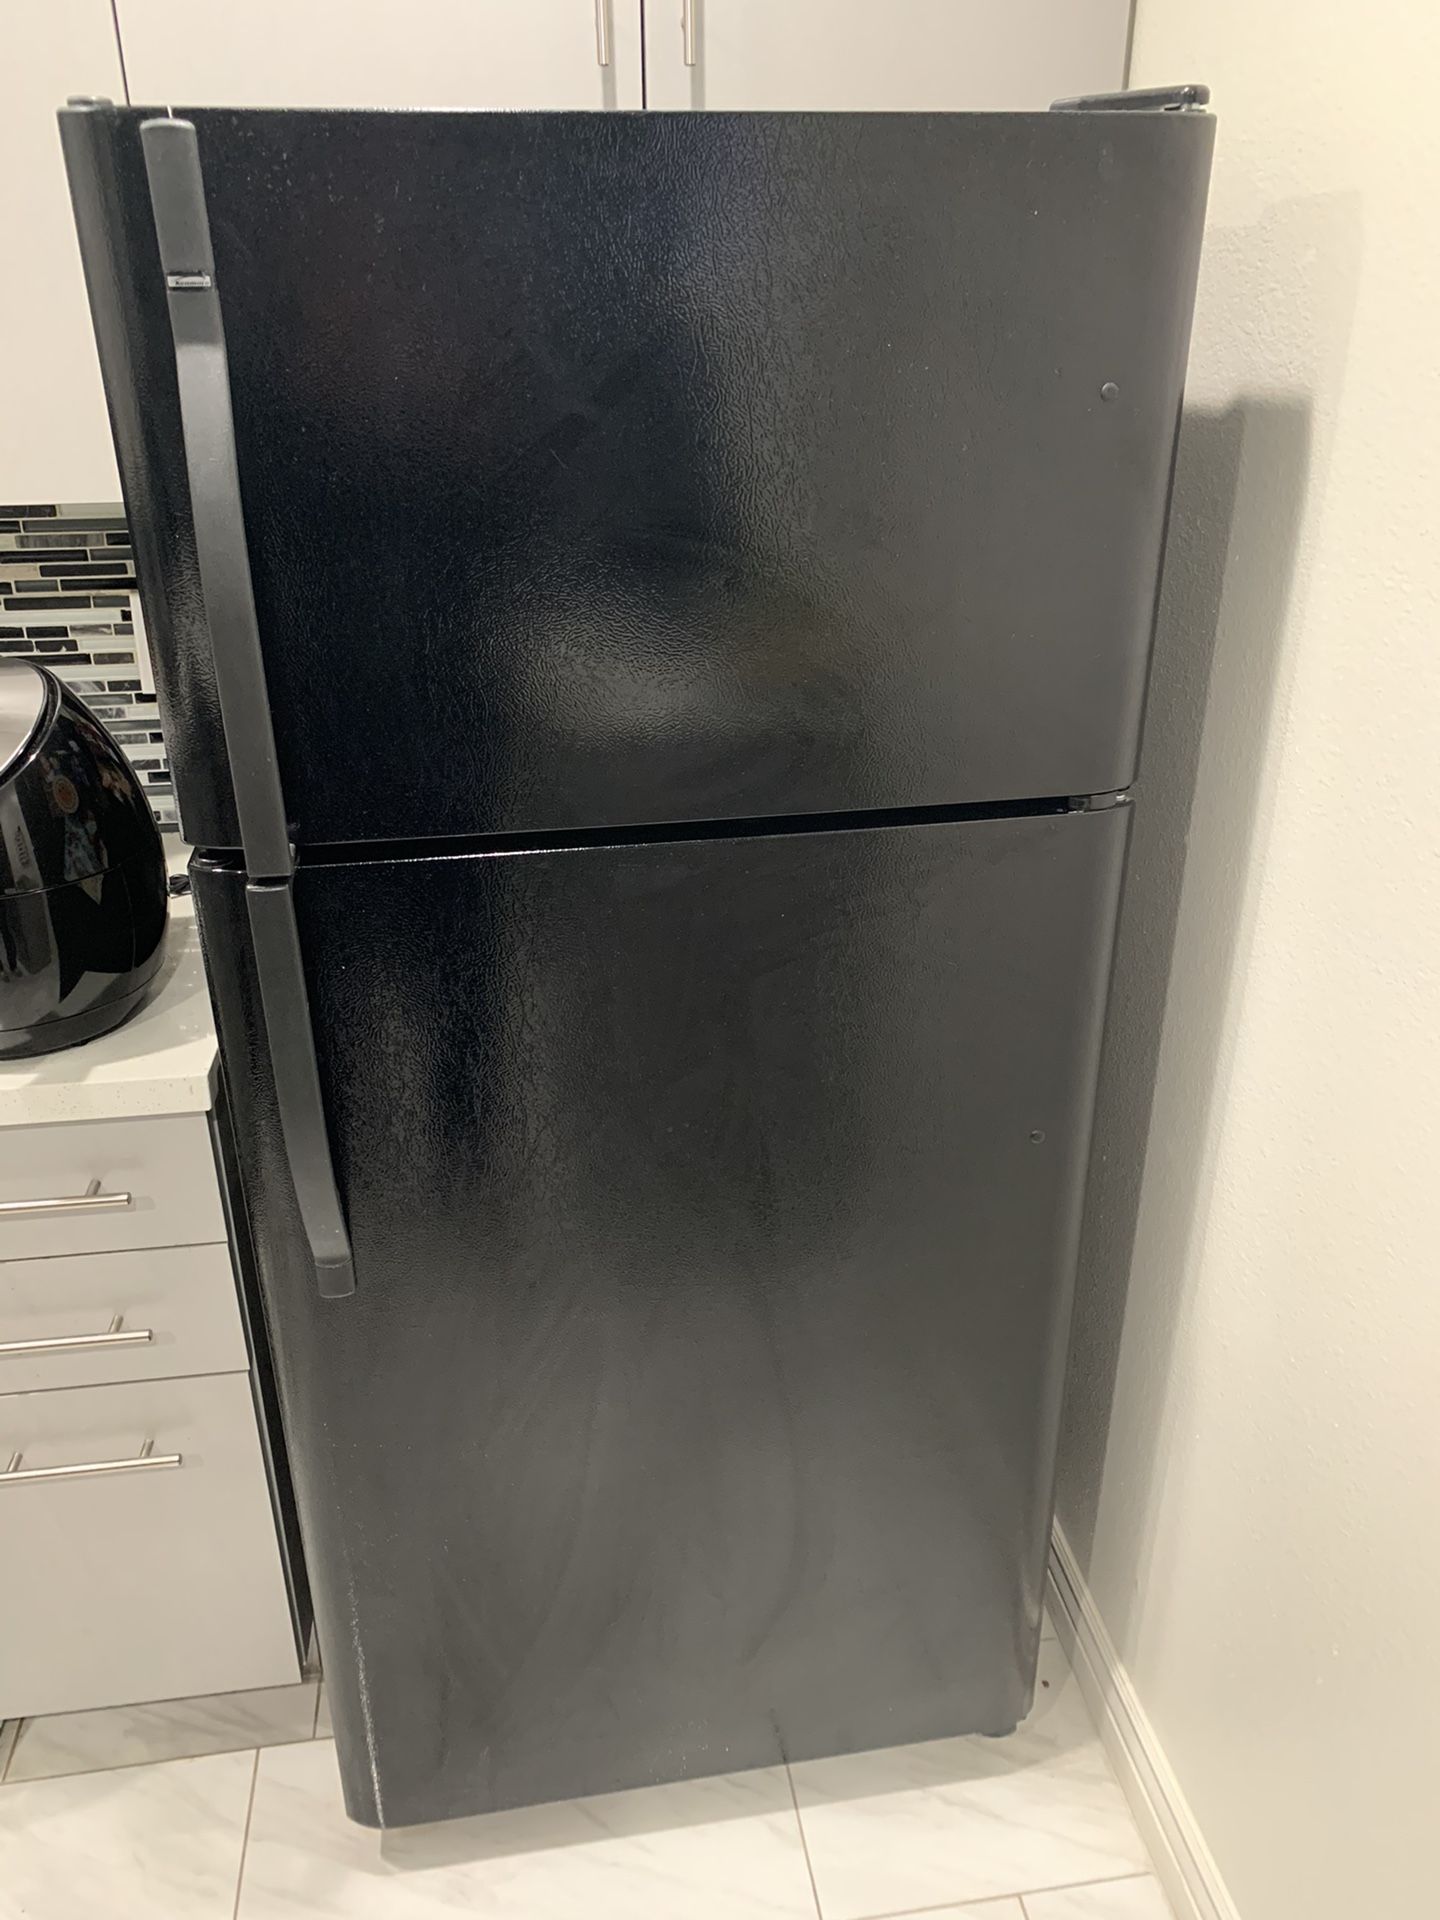 Kenmore refrigerator black